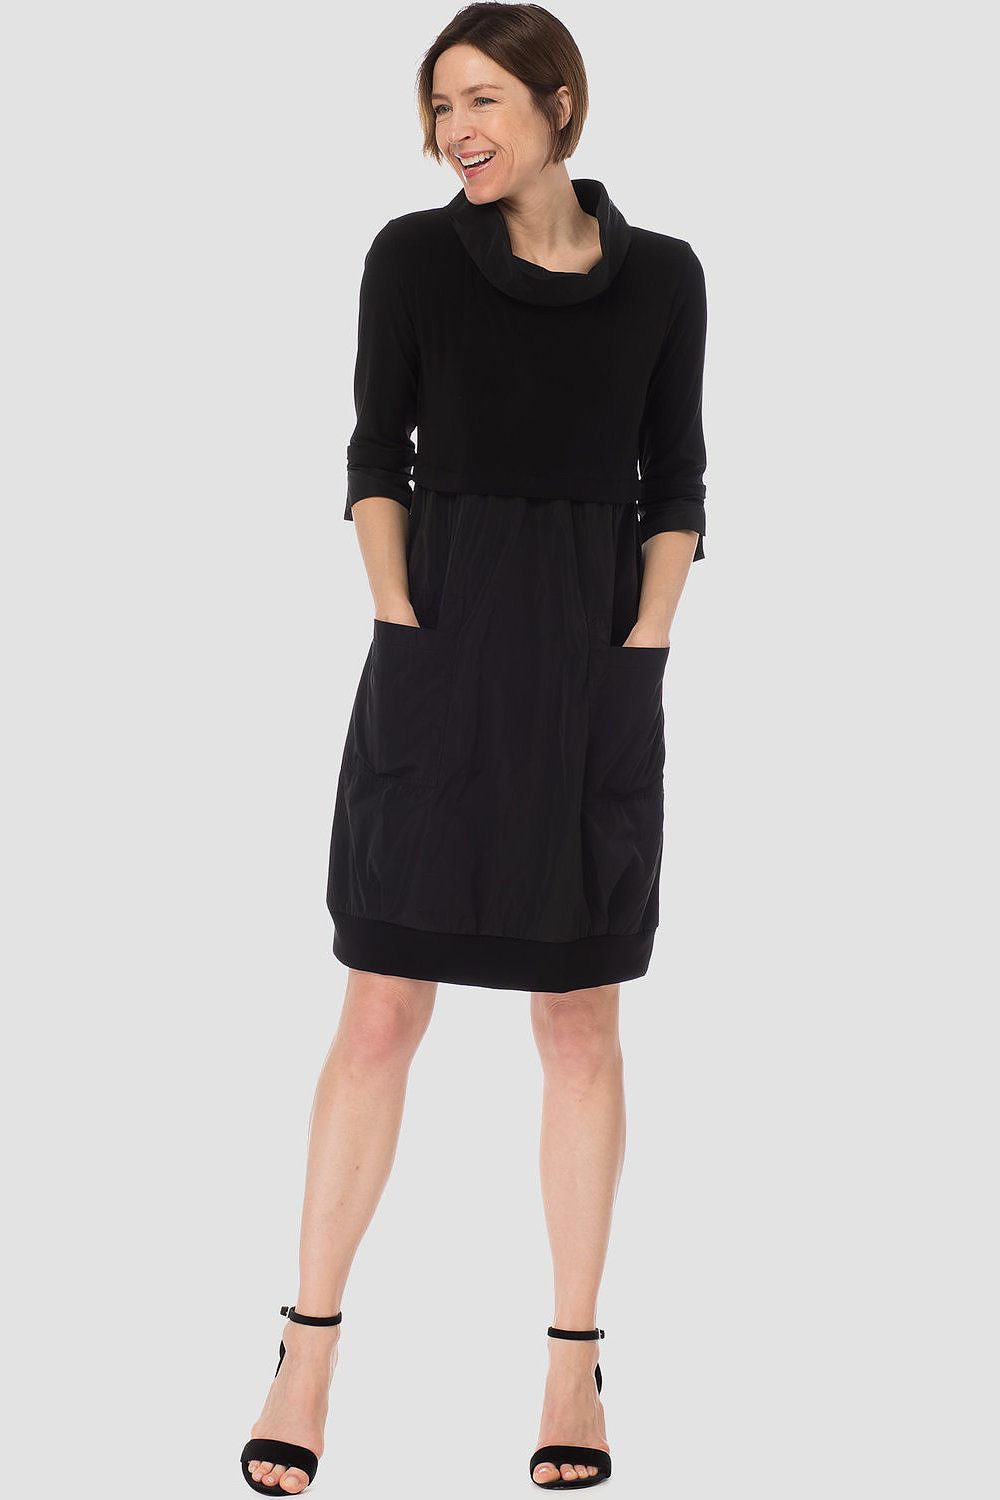 Two-Tone Dress Style 173444. Black